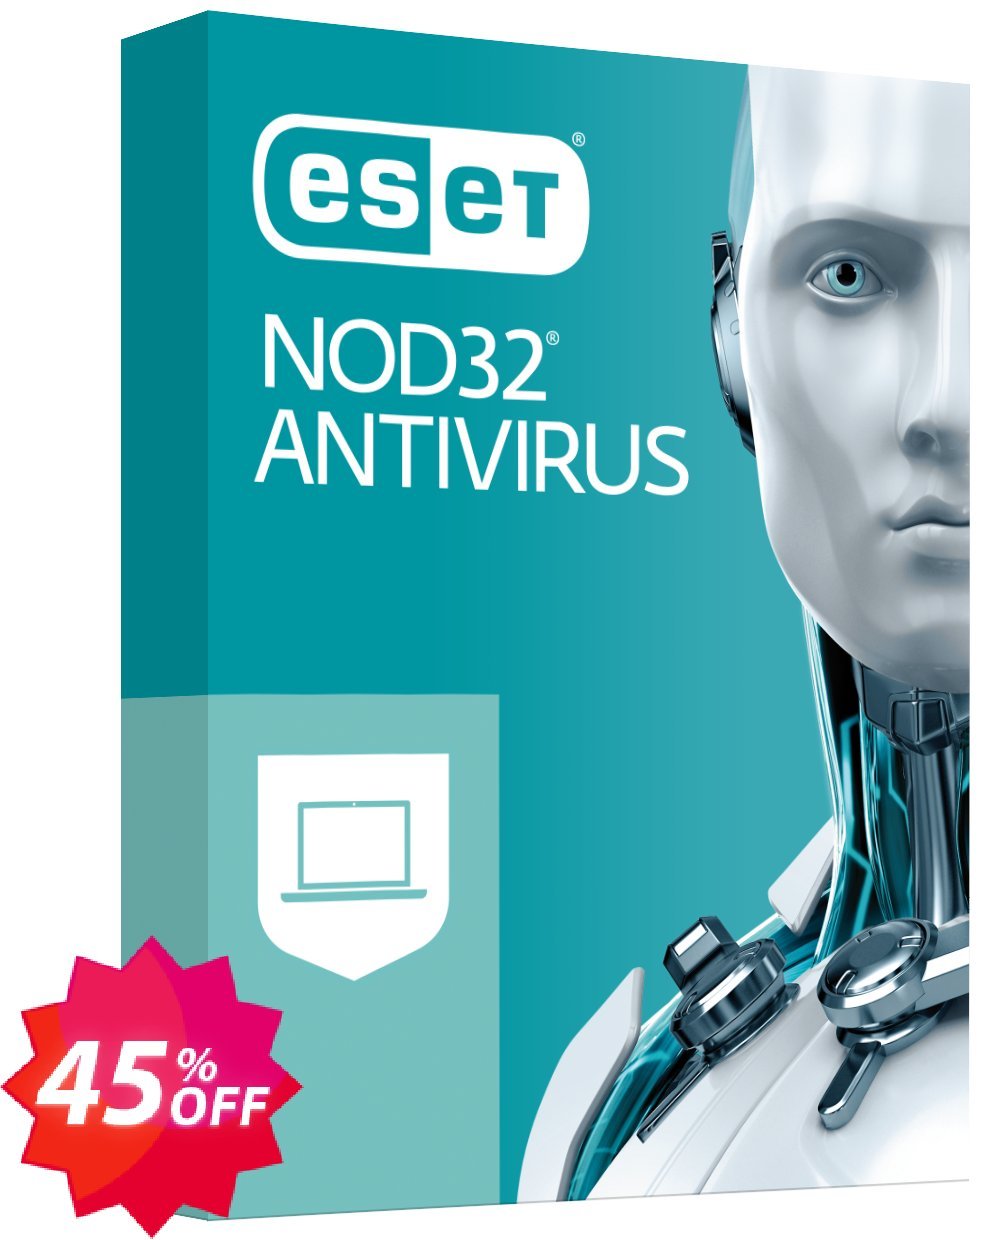 ESET NOD32 Antivirus - Renew 3 Years 3 Devices Coupon code 45% discount 